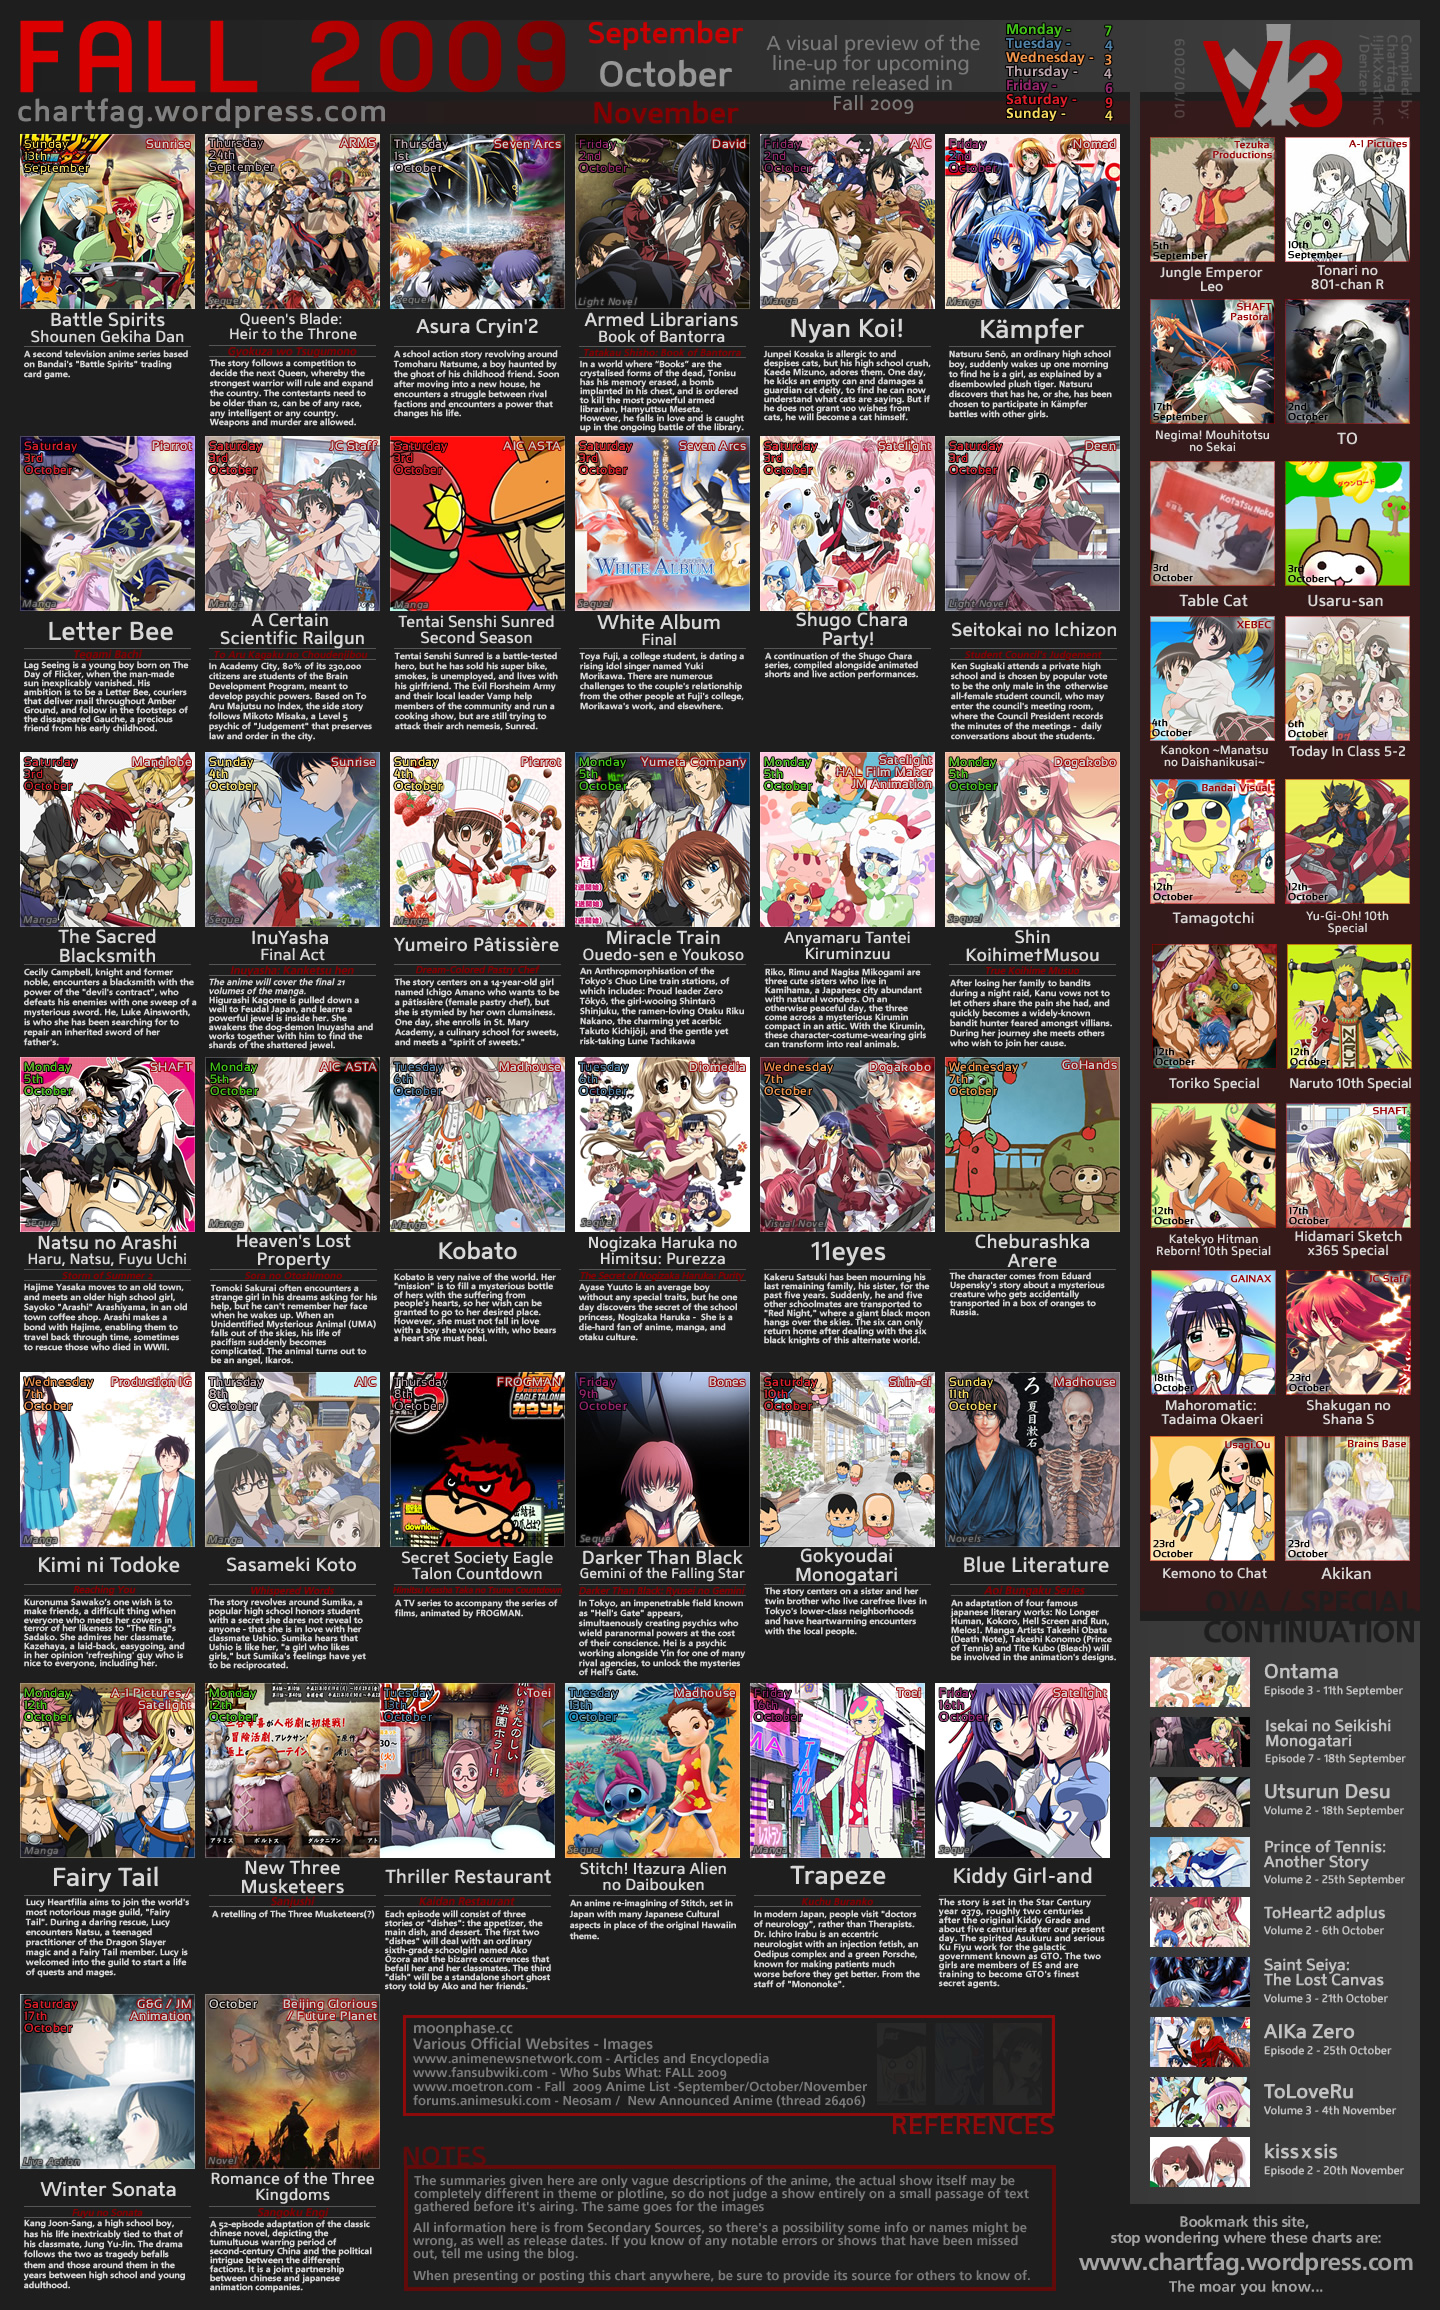 The-O Network - Fall Anime 2009 List (Update 2)